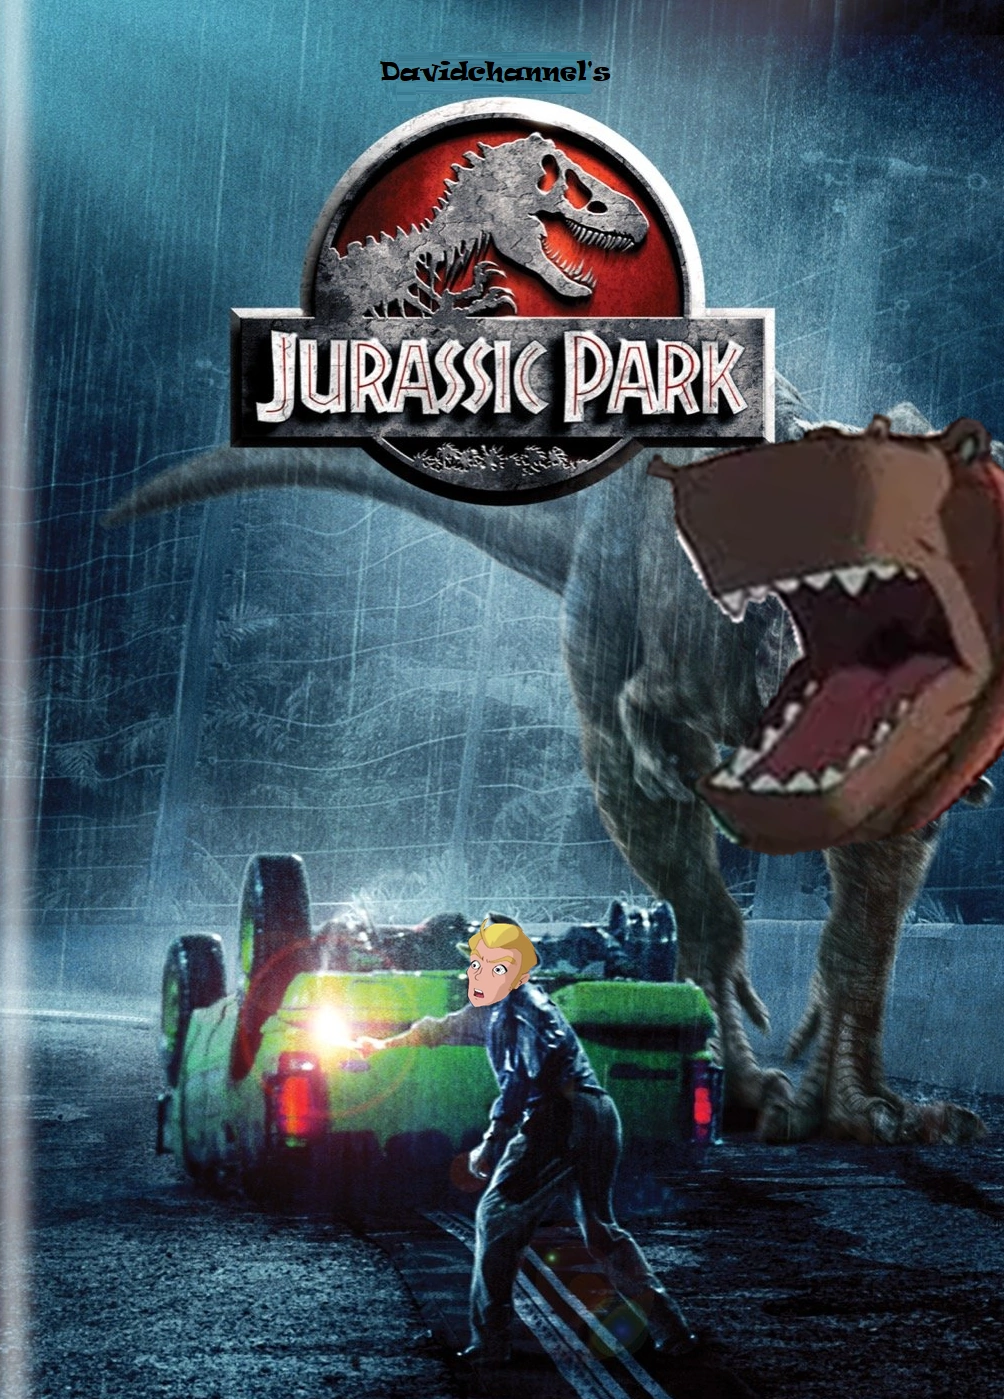 Disney's Dinosaur (video game) - Wikipedia